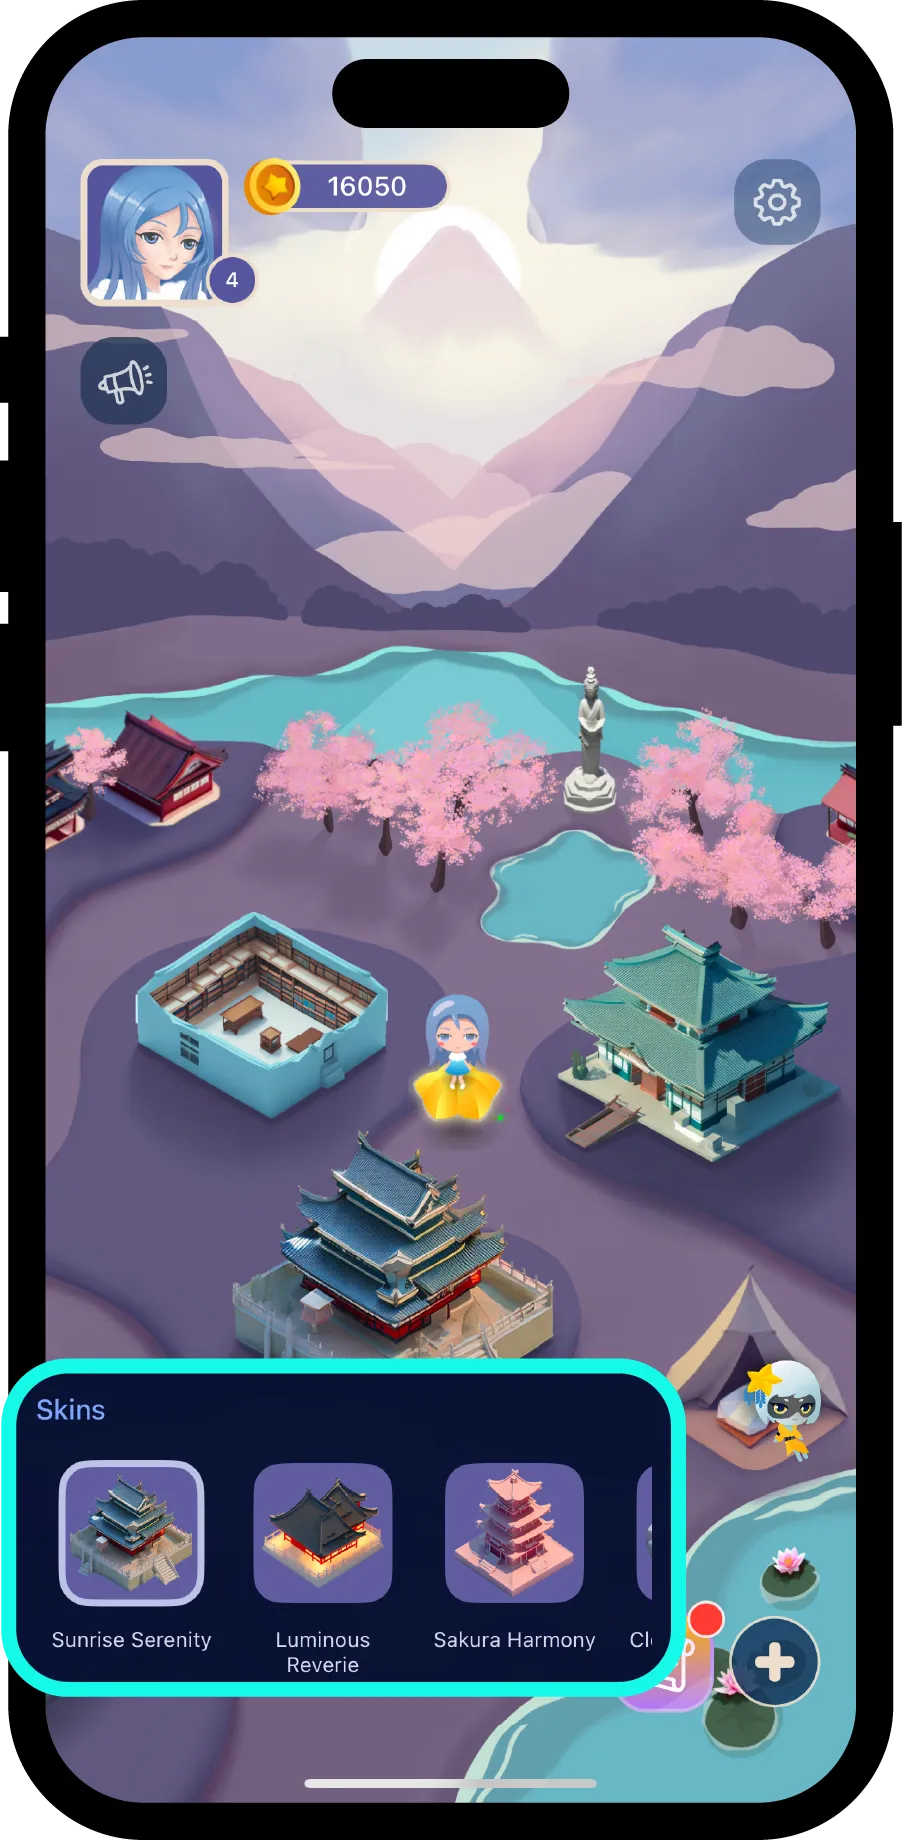 Staraxy's iOS app village screenshot